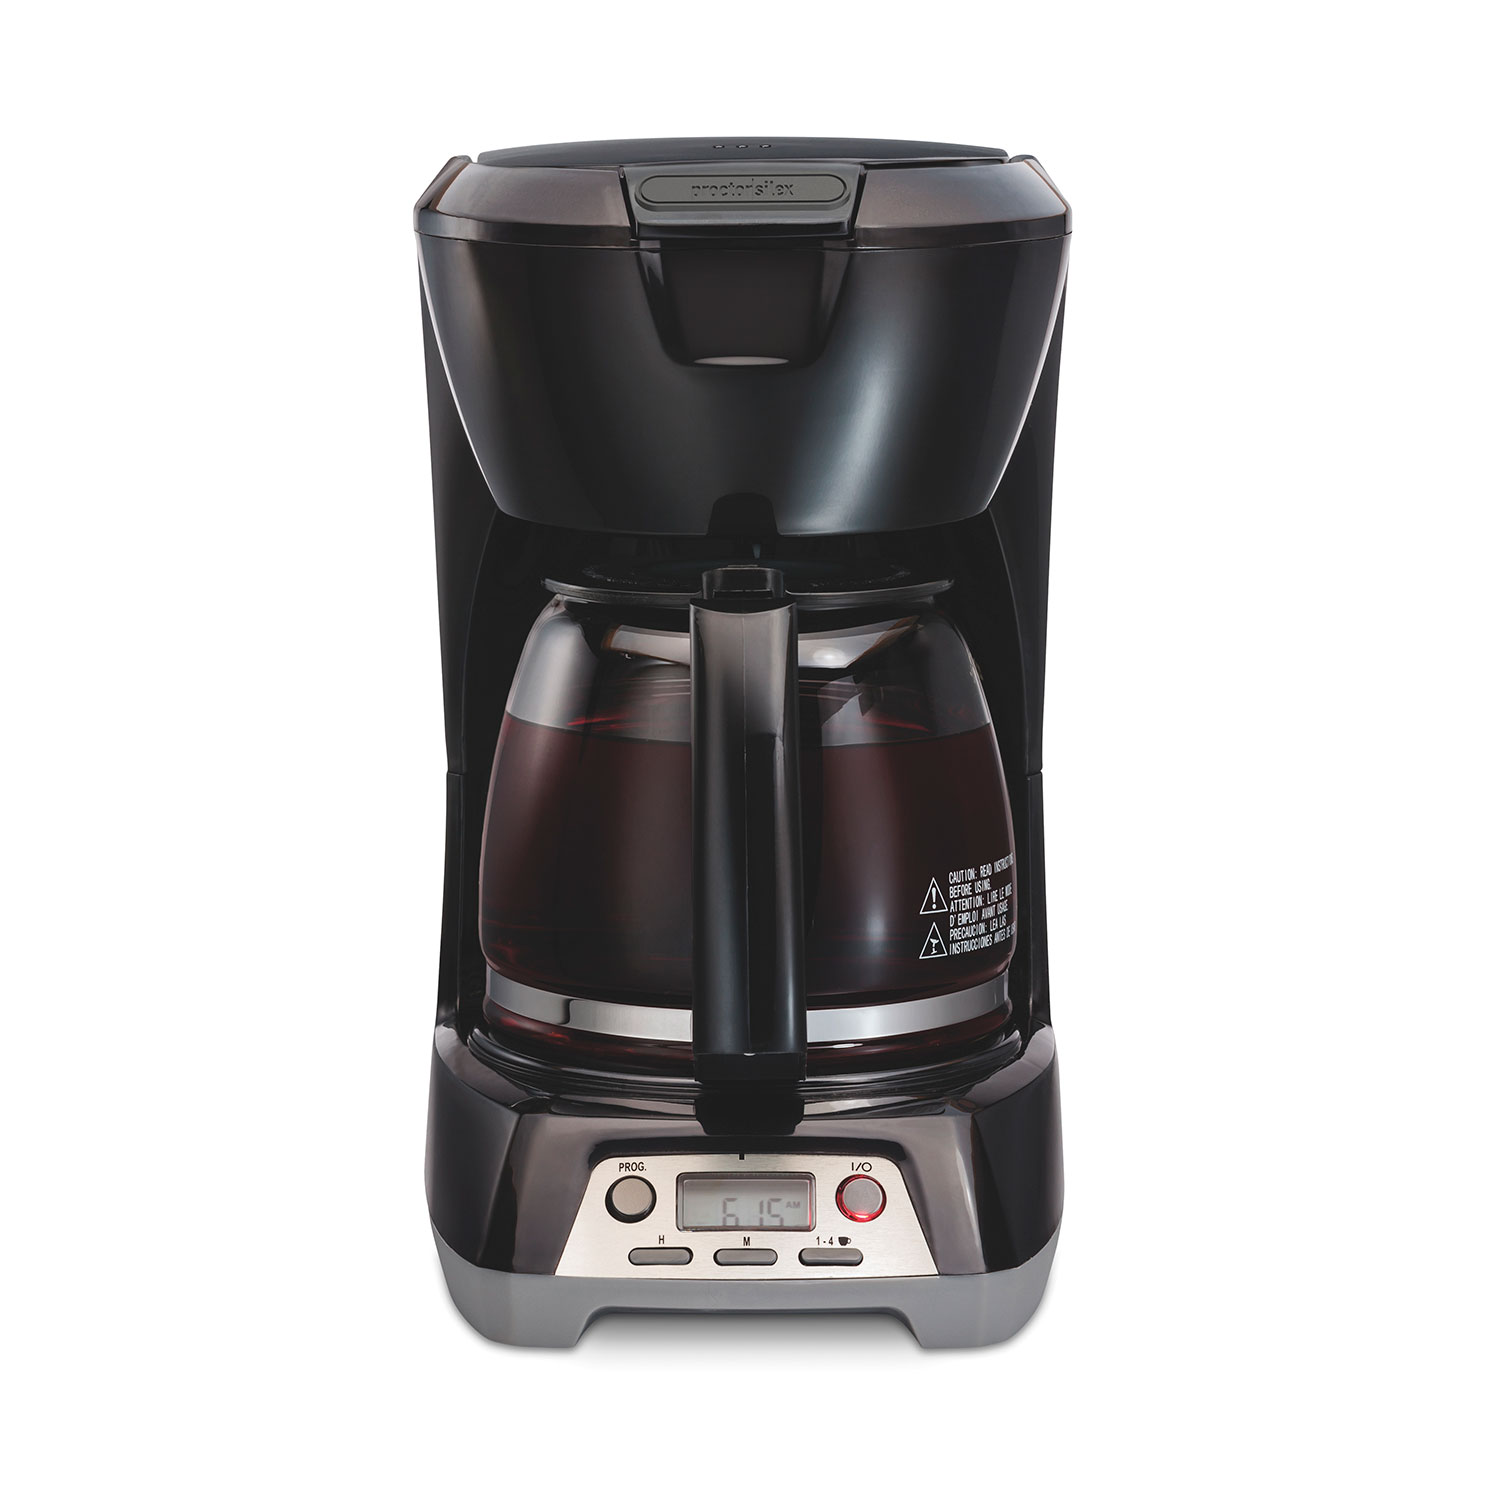 Proctor Silex Single-Serve Coffee Maker with 40 oz. Reservoir - Black